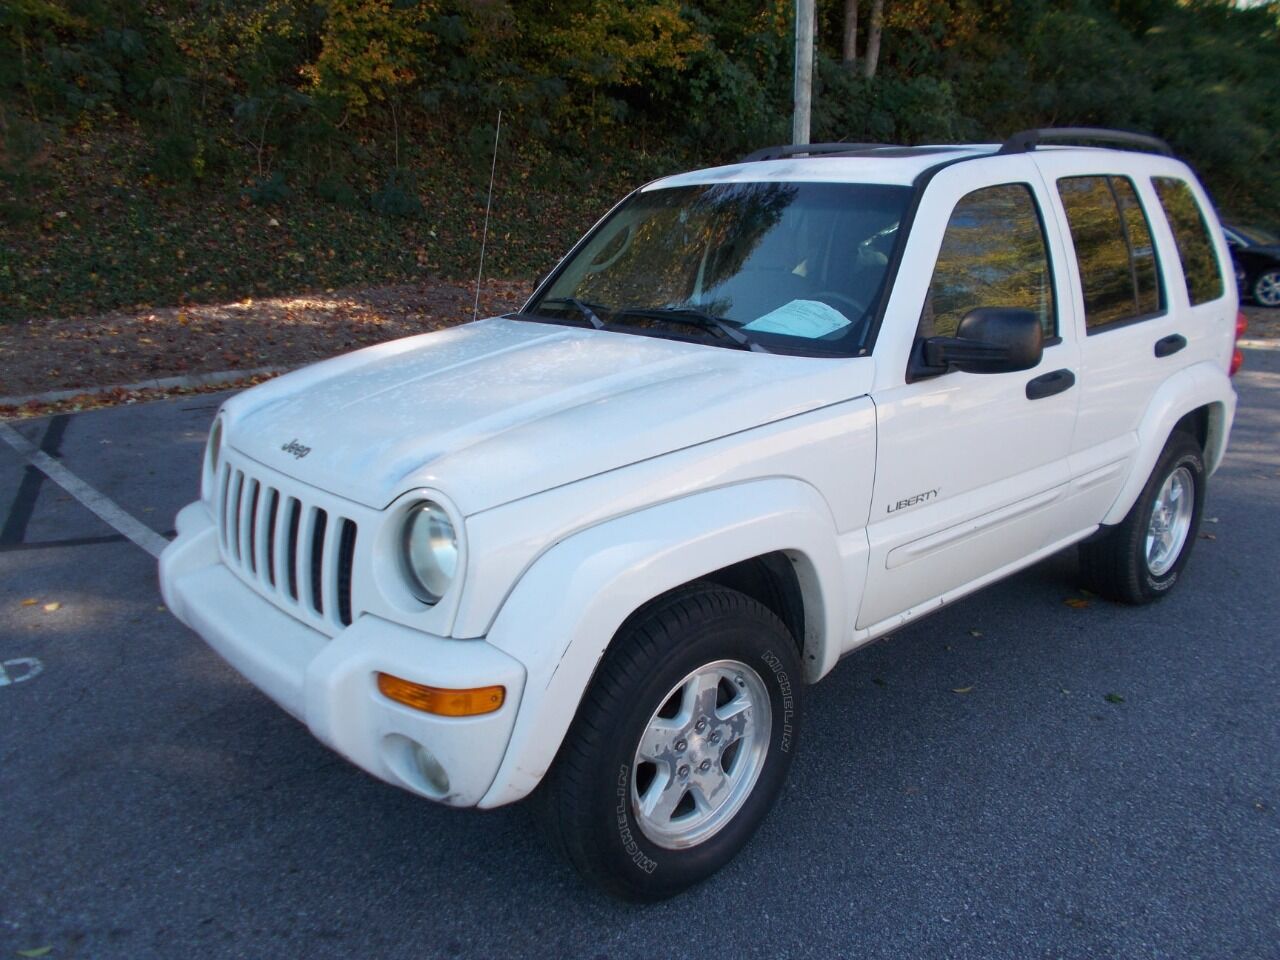 2004 Jeep Liberty For Sale In North Carolina - Carsforsale.com®